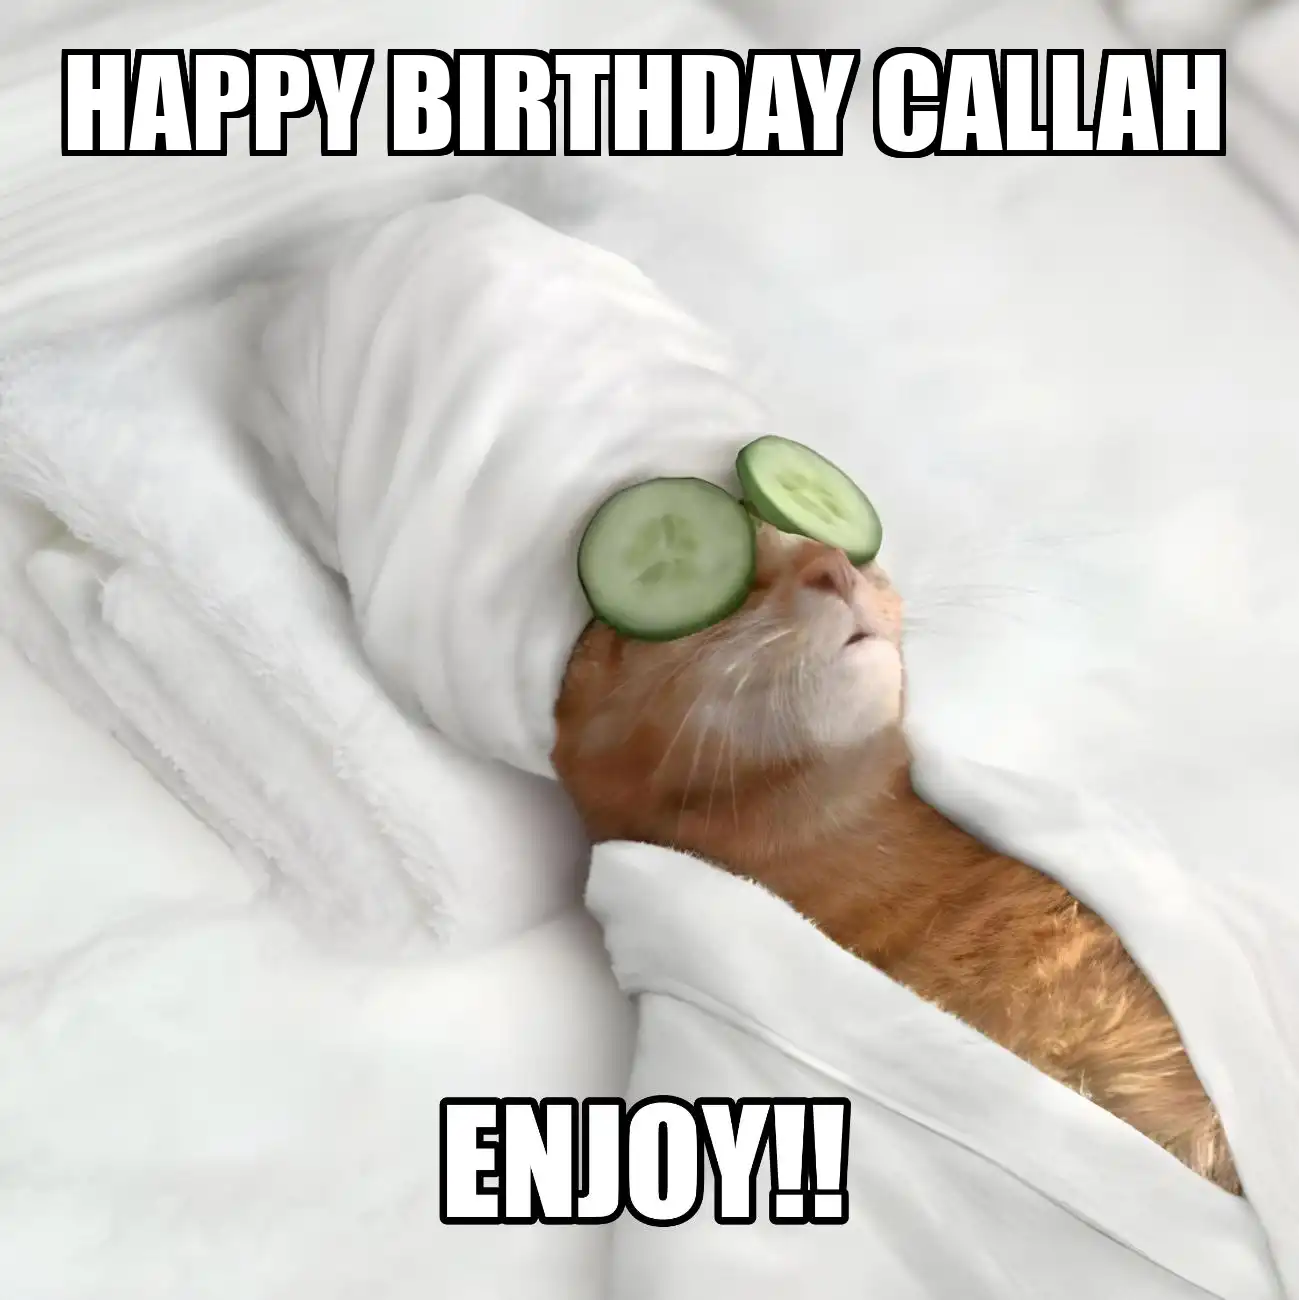 Happy Birthday Callah Enjoy Cat Meme